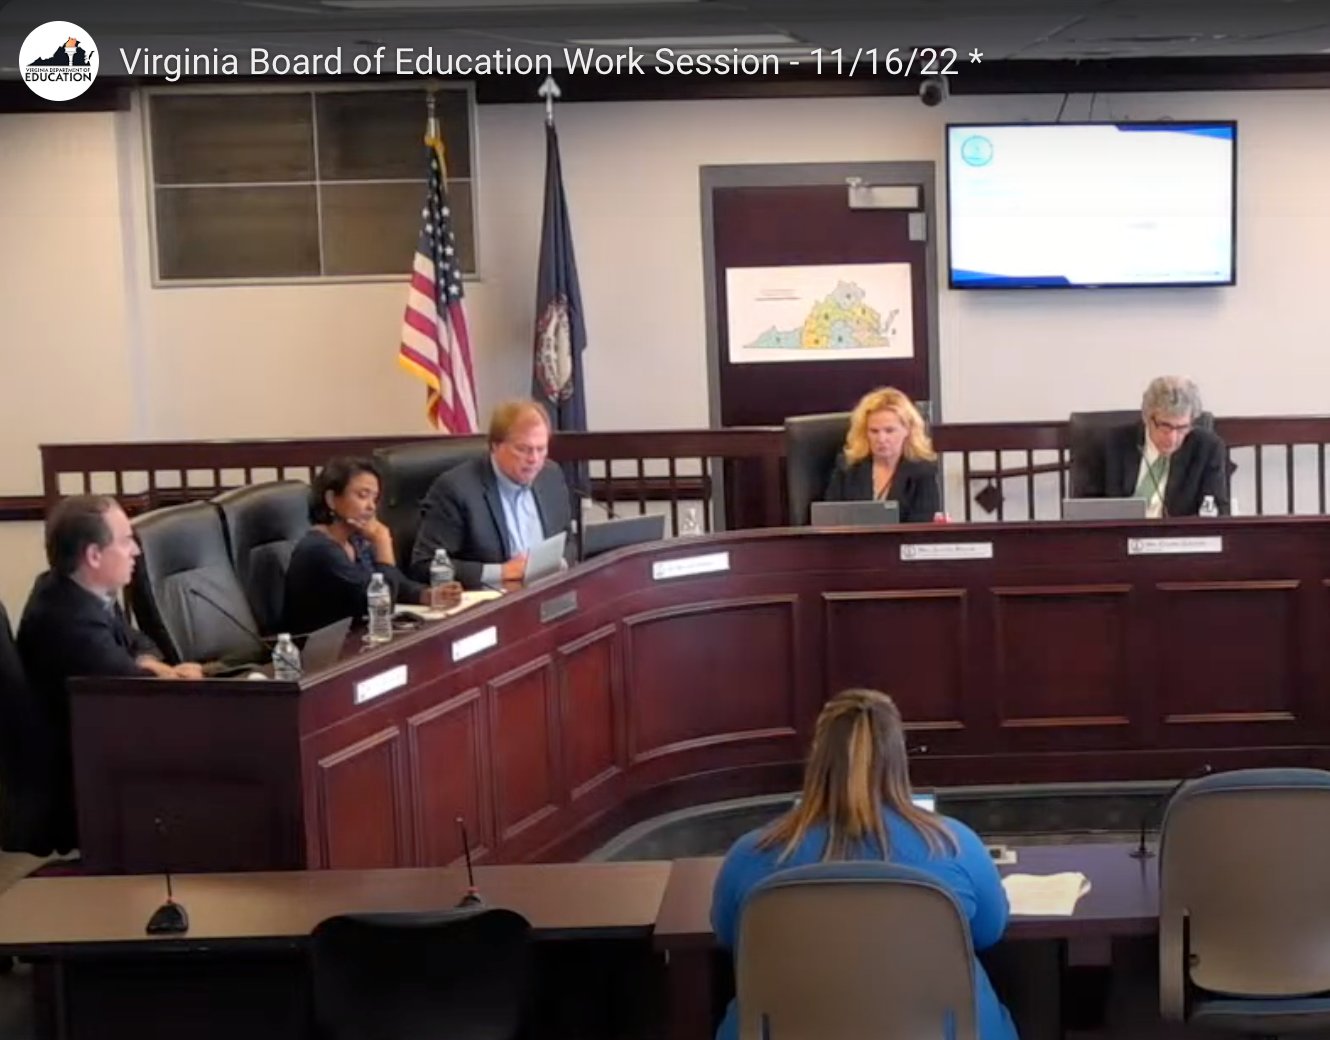 Virginia Board of Education work session meeting, Nov. 16, 2022.